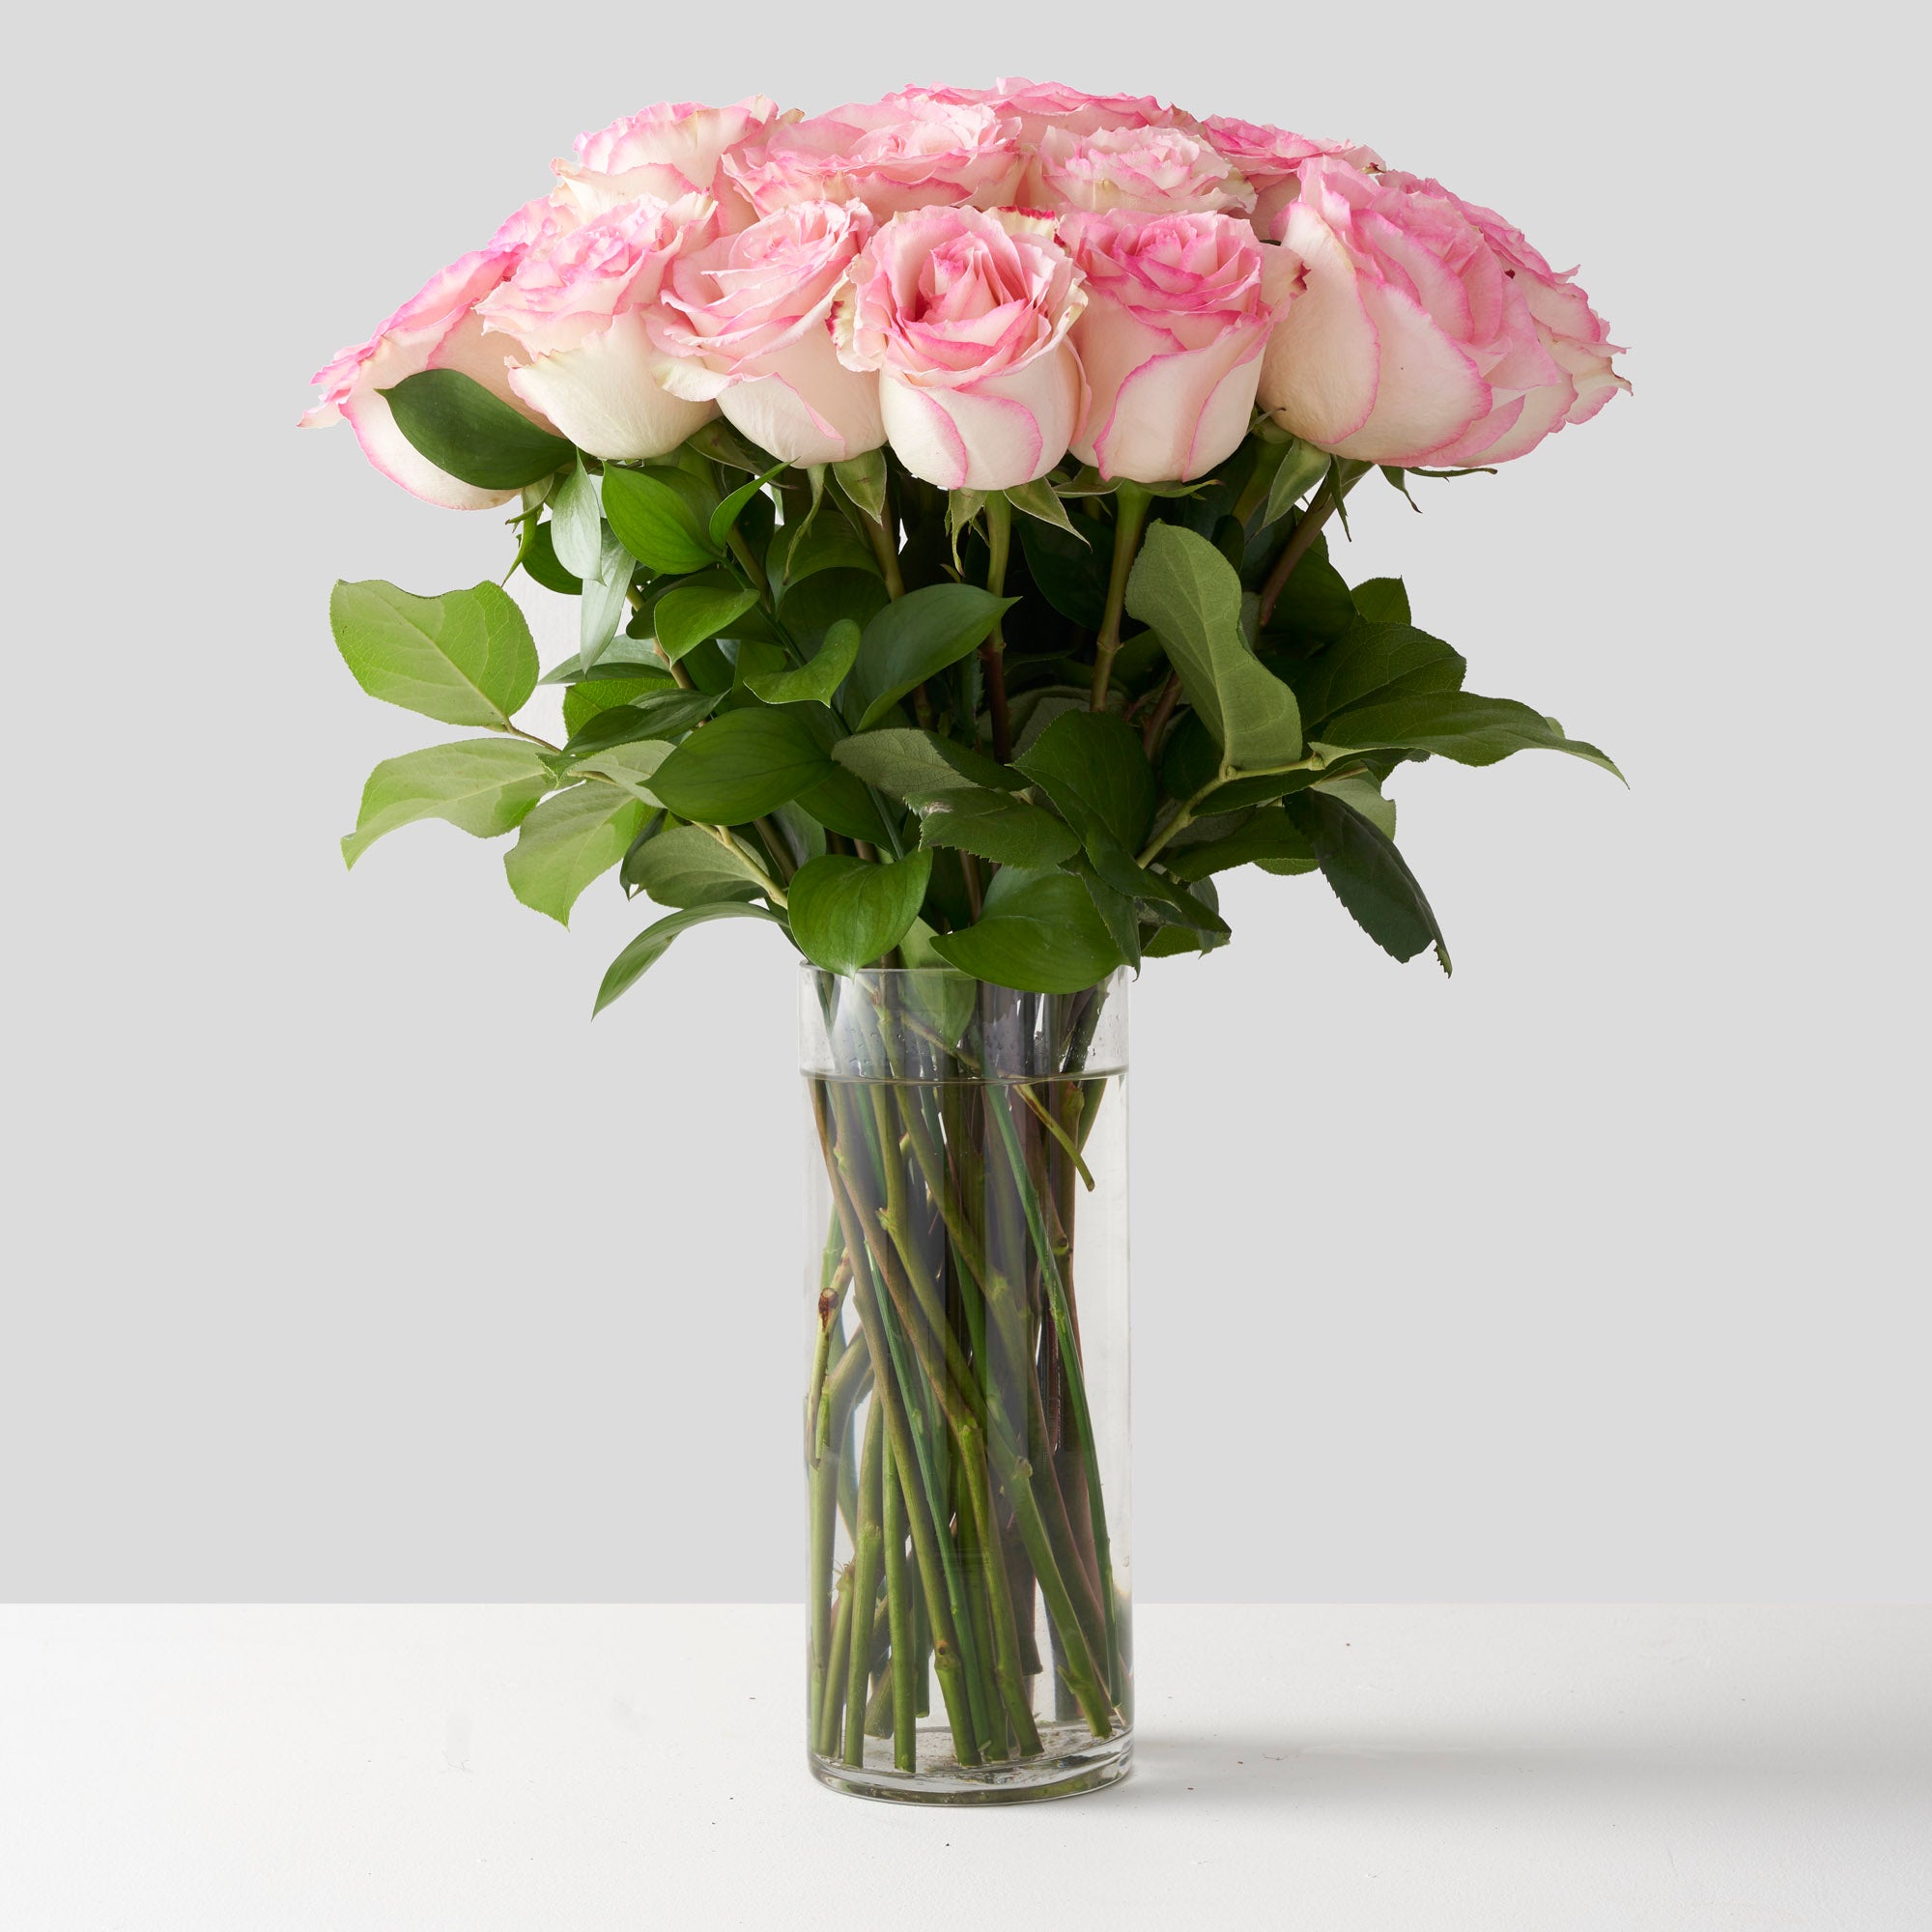 Twenty-four pink Esperance roses arranged in simple glass vase on white background.